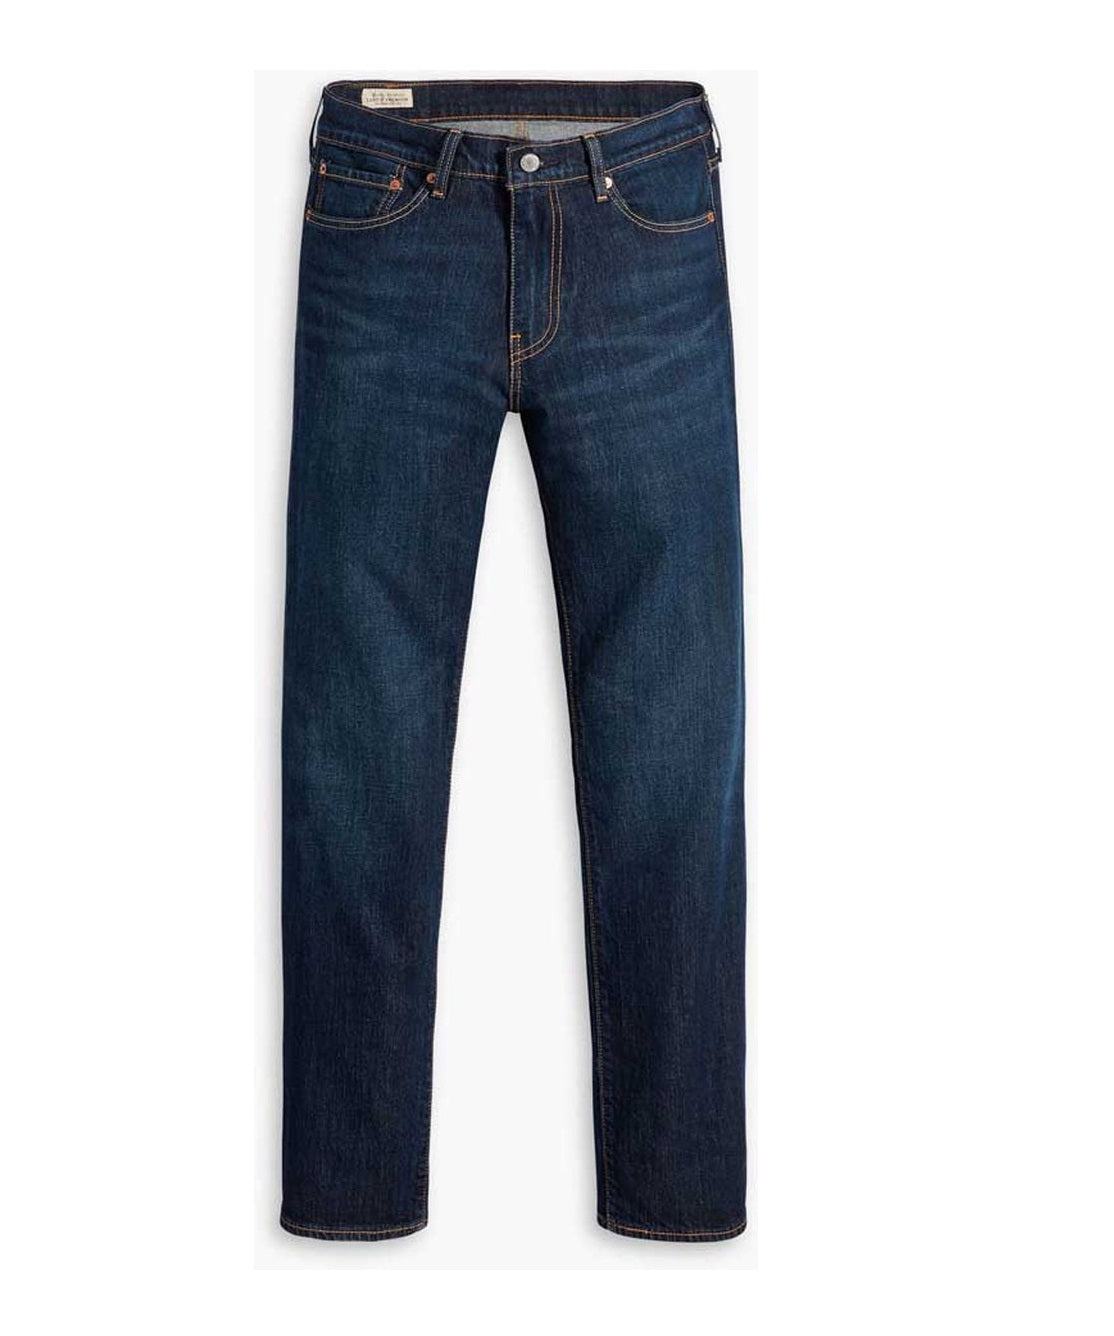 Levis pantalone jeans 511 Slim 0451155661 blu scuro